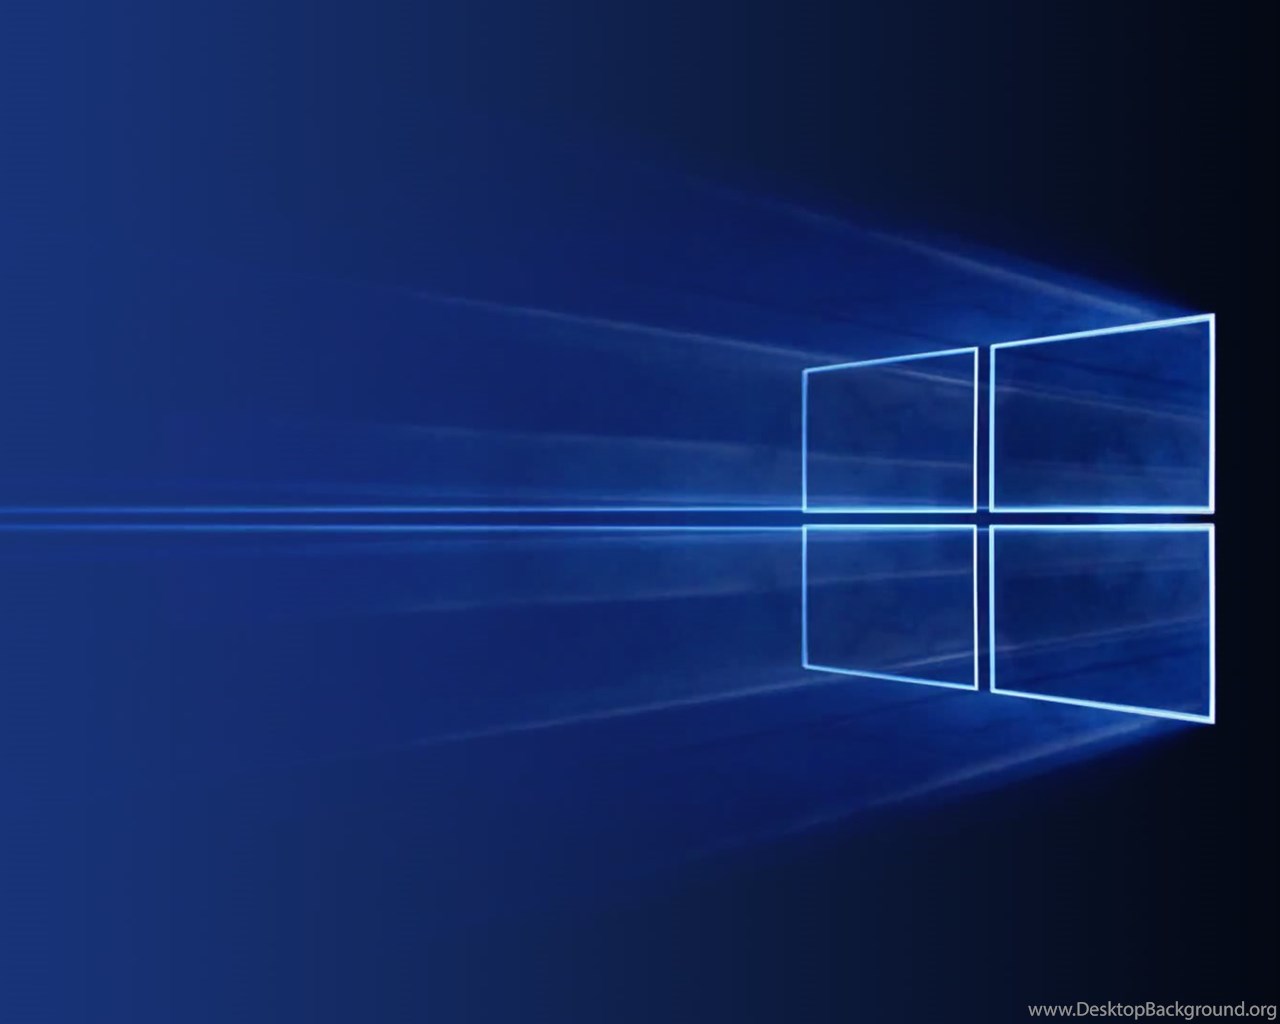 Microsoft windows installer 5 for windows 7 free download 64-bit